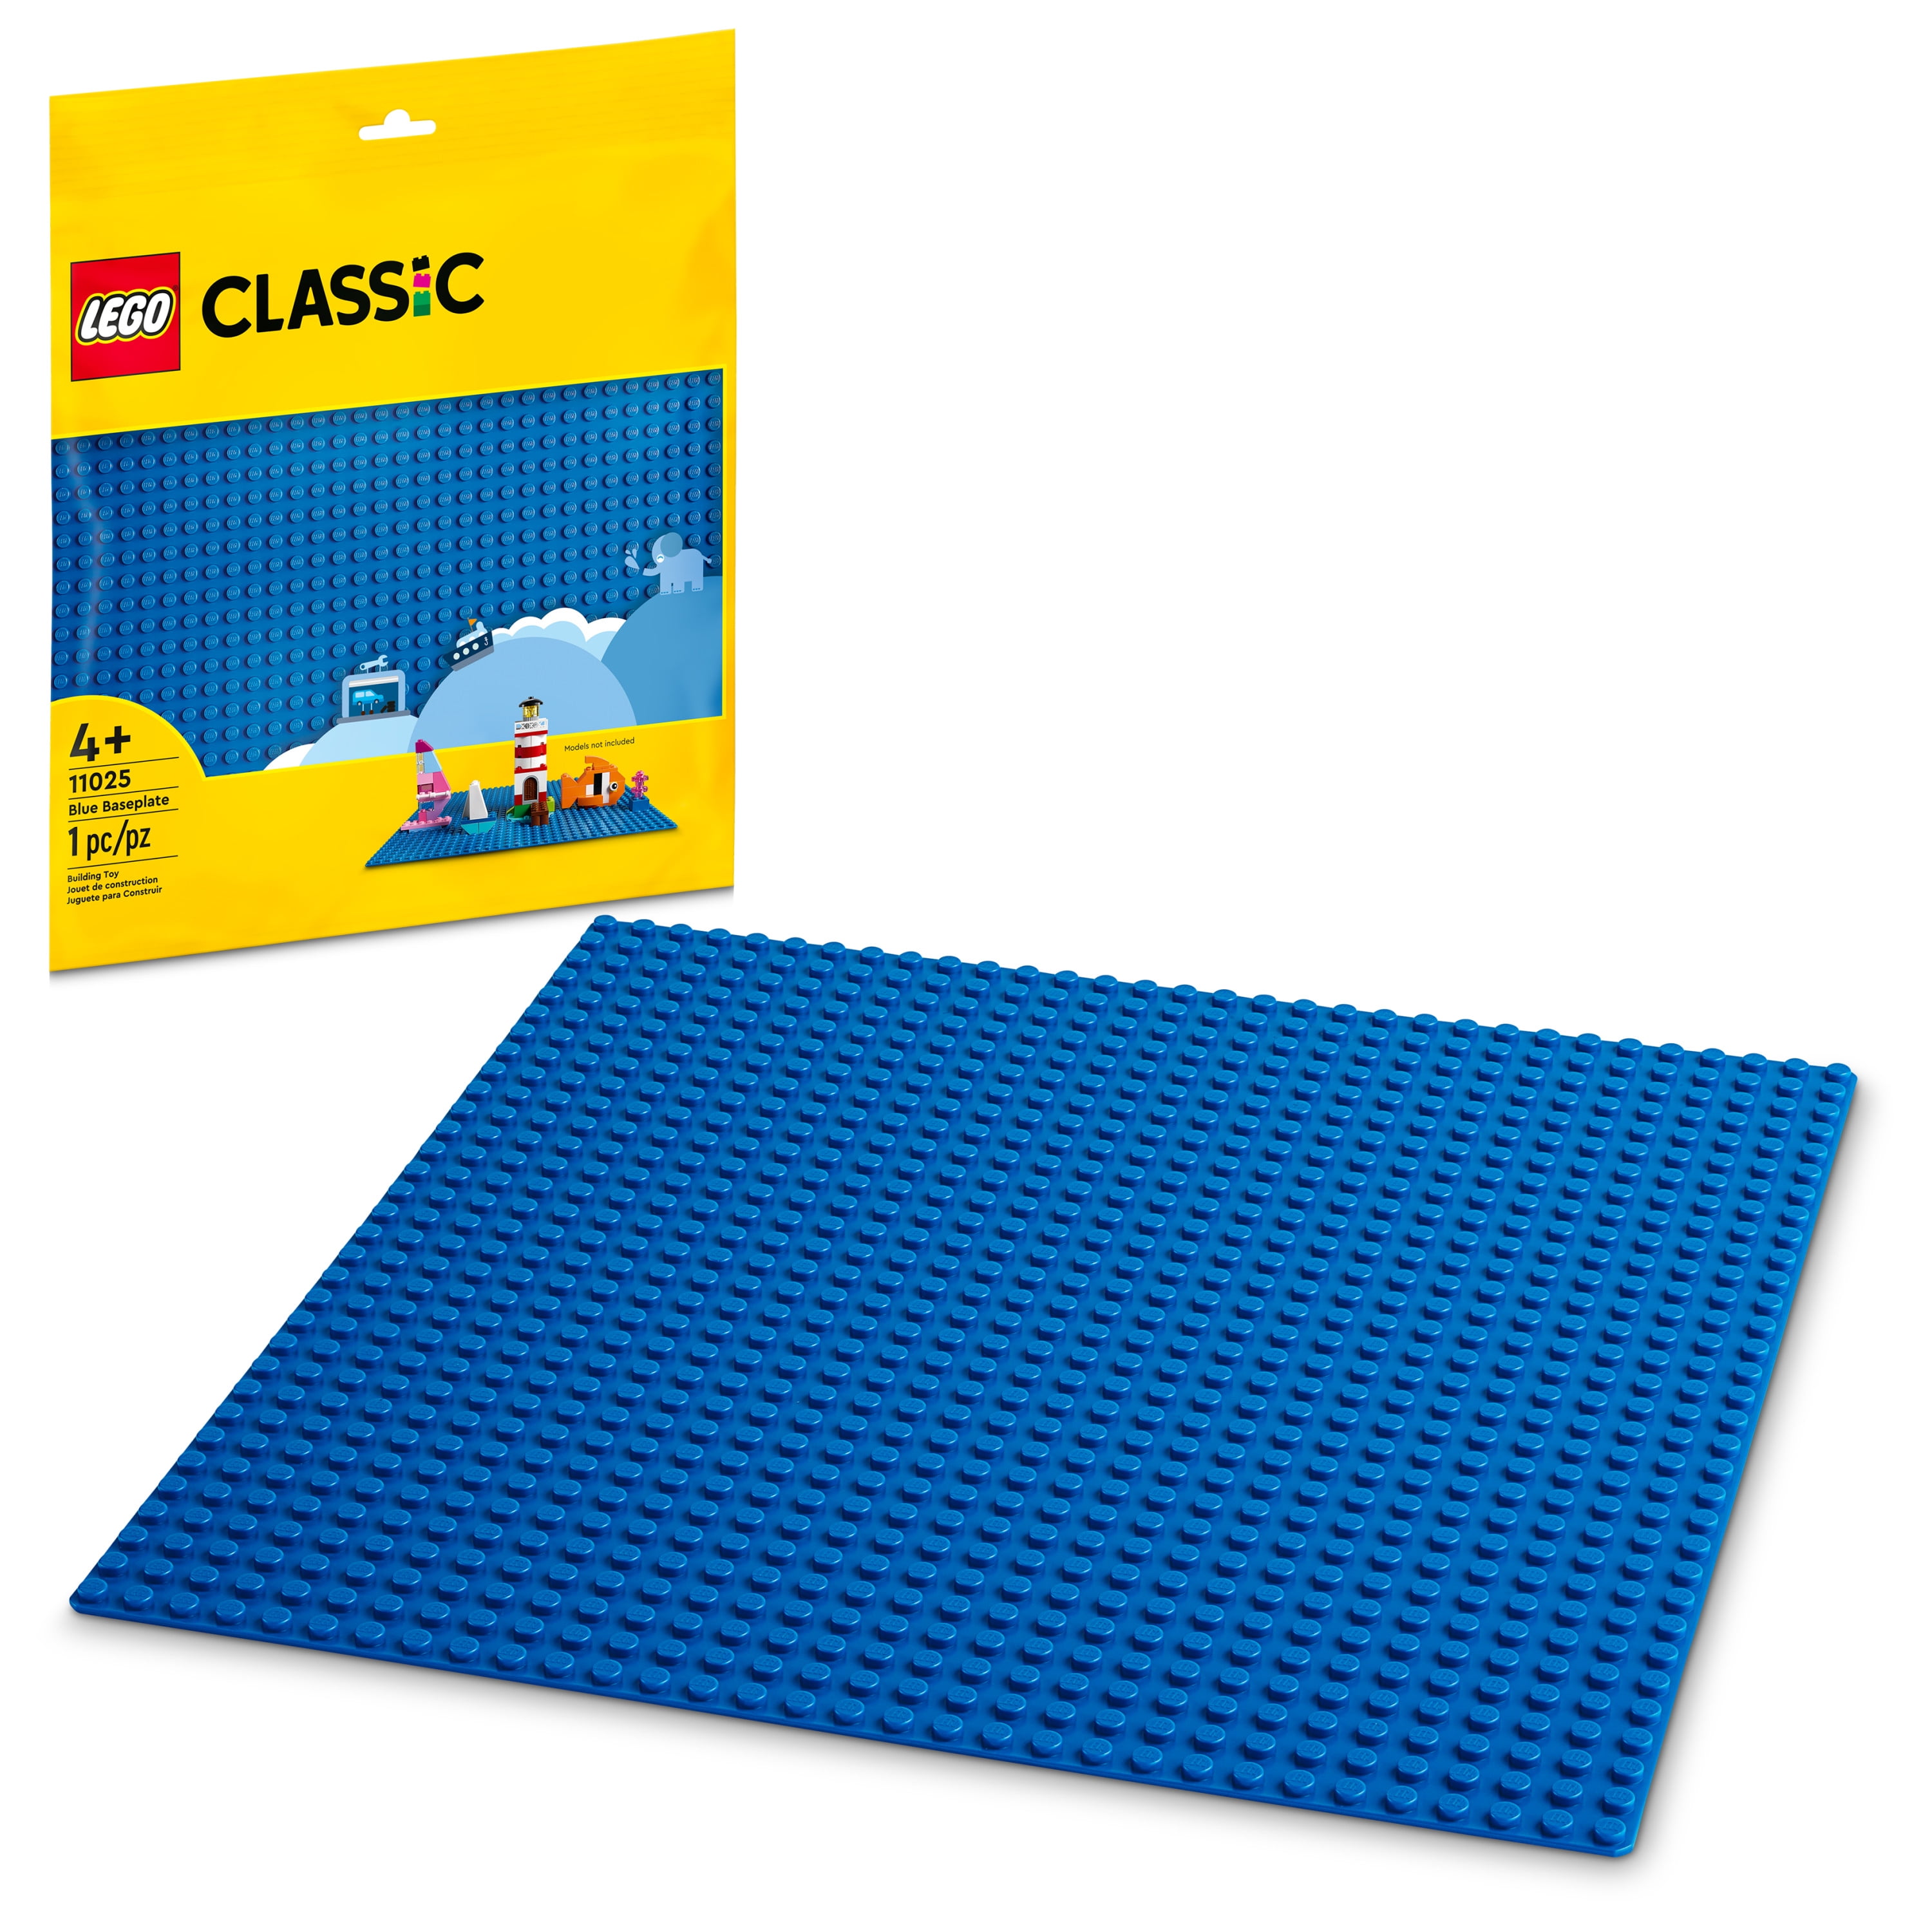 light grey BASE PLATE for Minifigure Construction blocks building board 